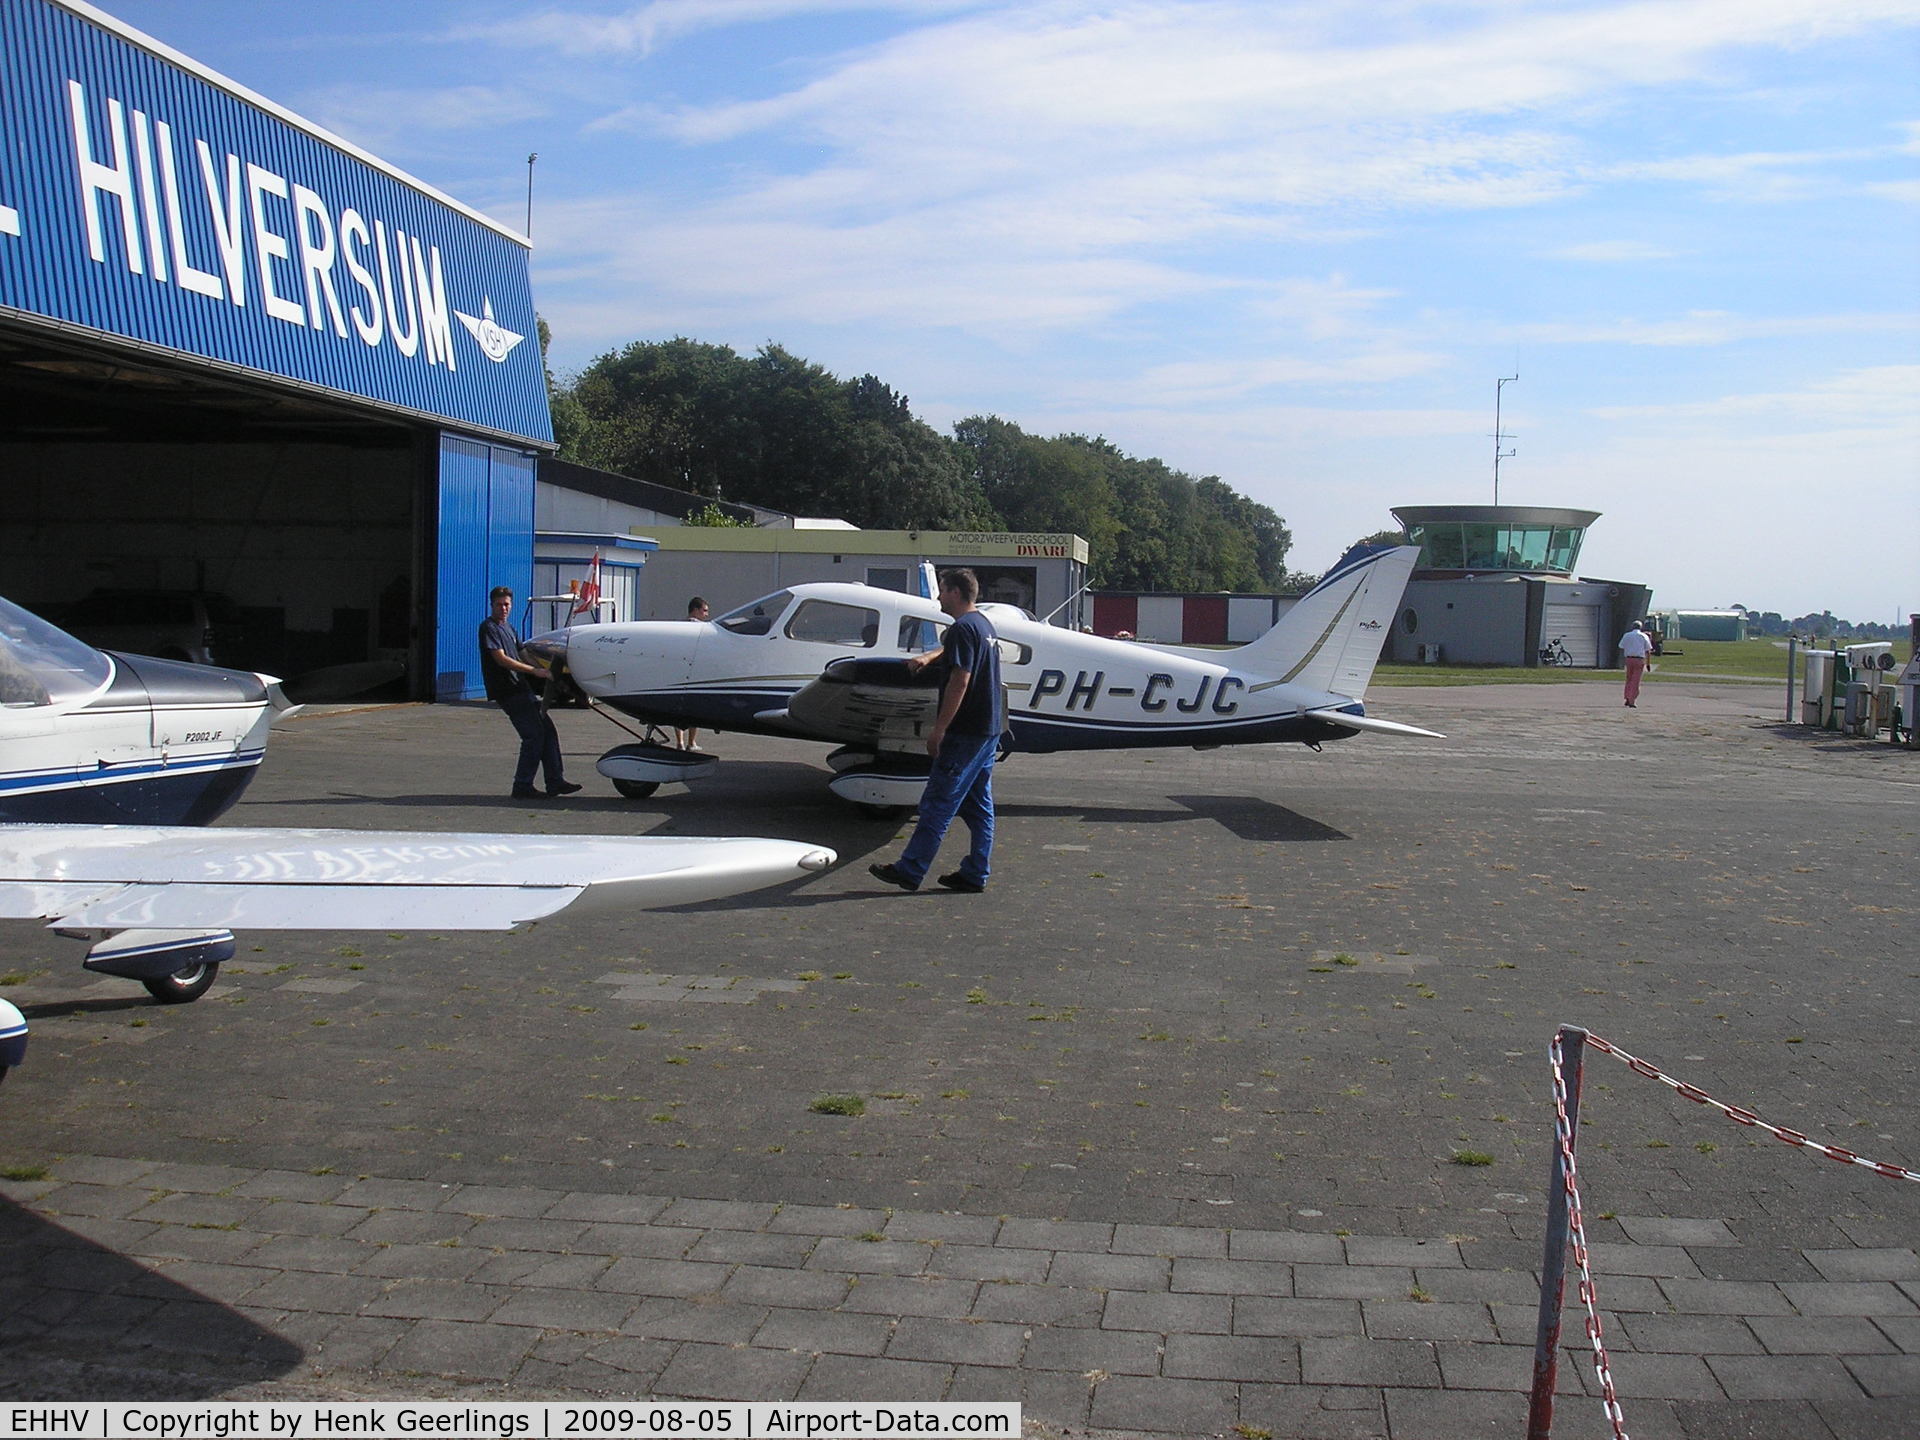 Hilversum Airport, Hilversum Netherlands (EHHV) - Hilversum Aerodrome hangar Flying school